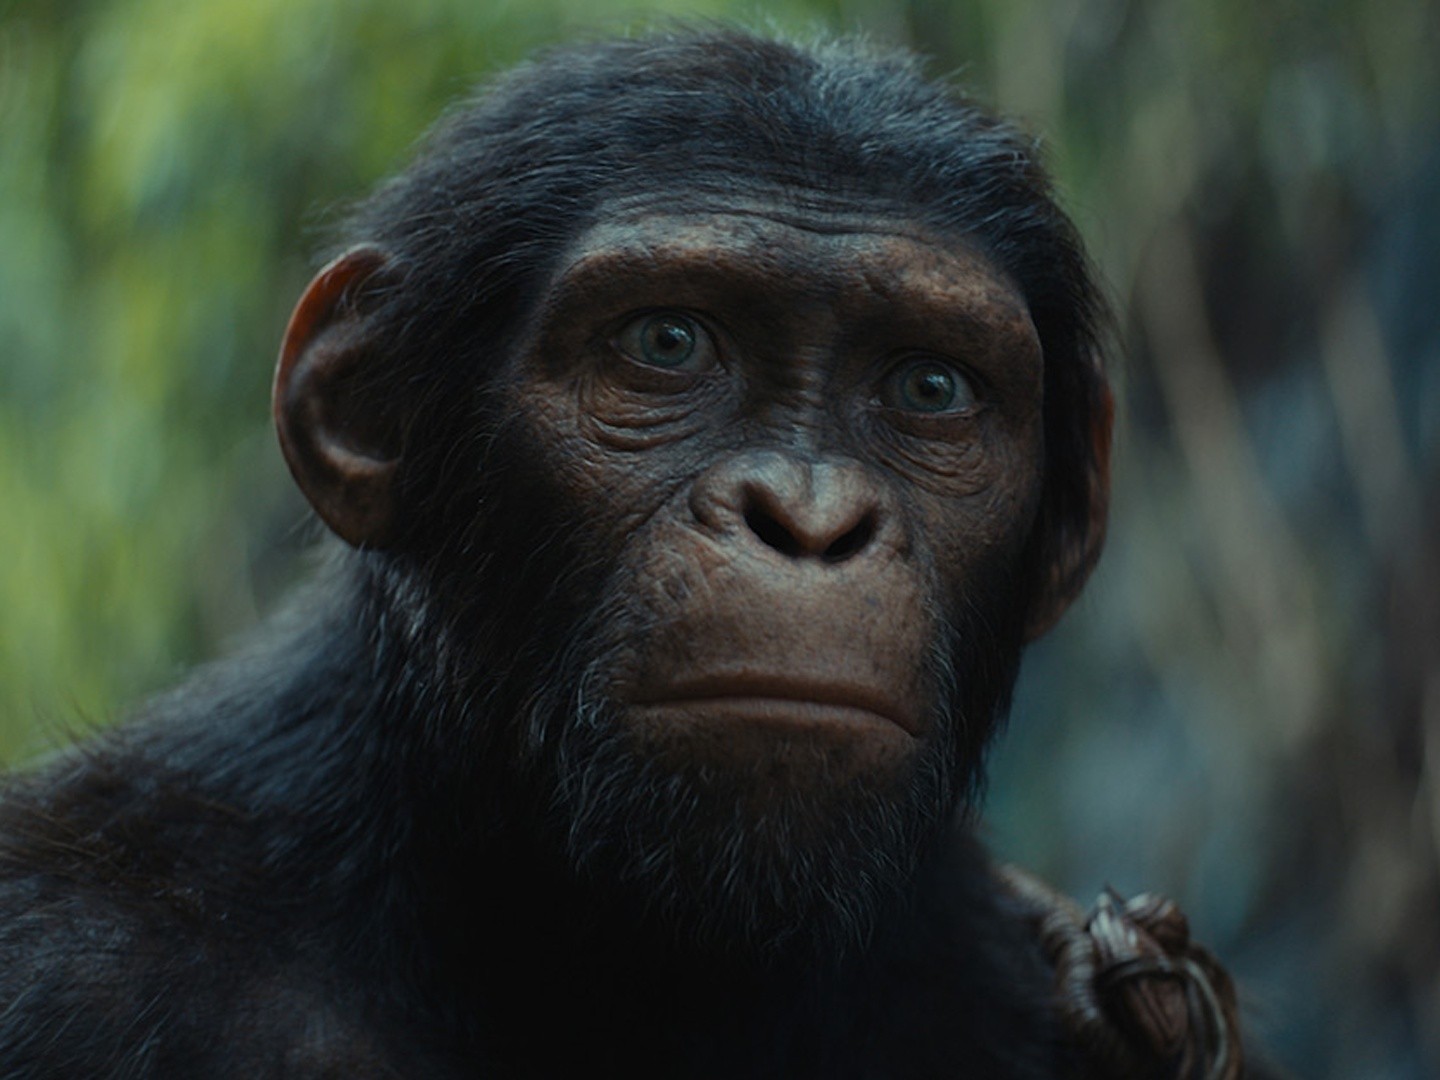 Animal Kingdom: Let's Go Ape - Rotten Tomatoes